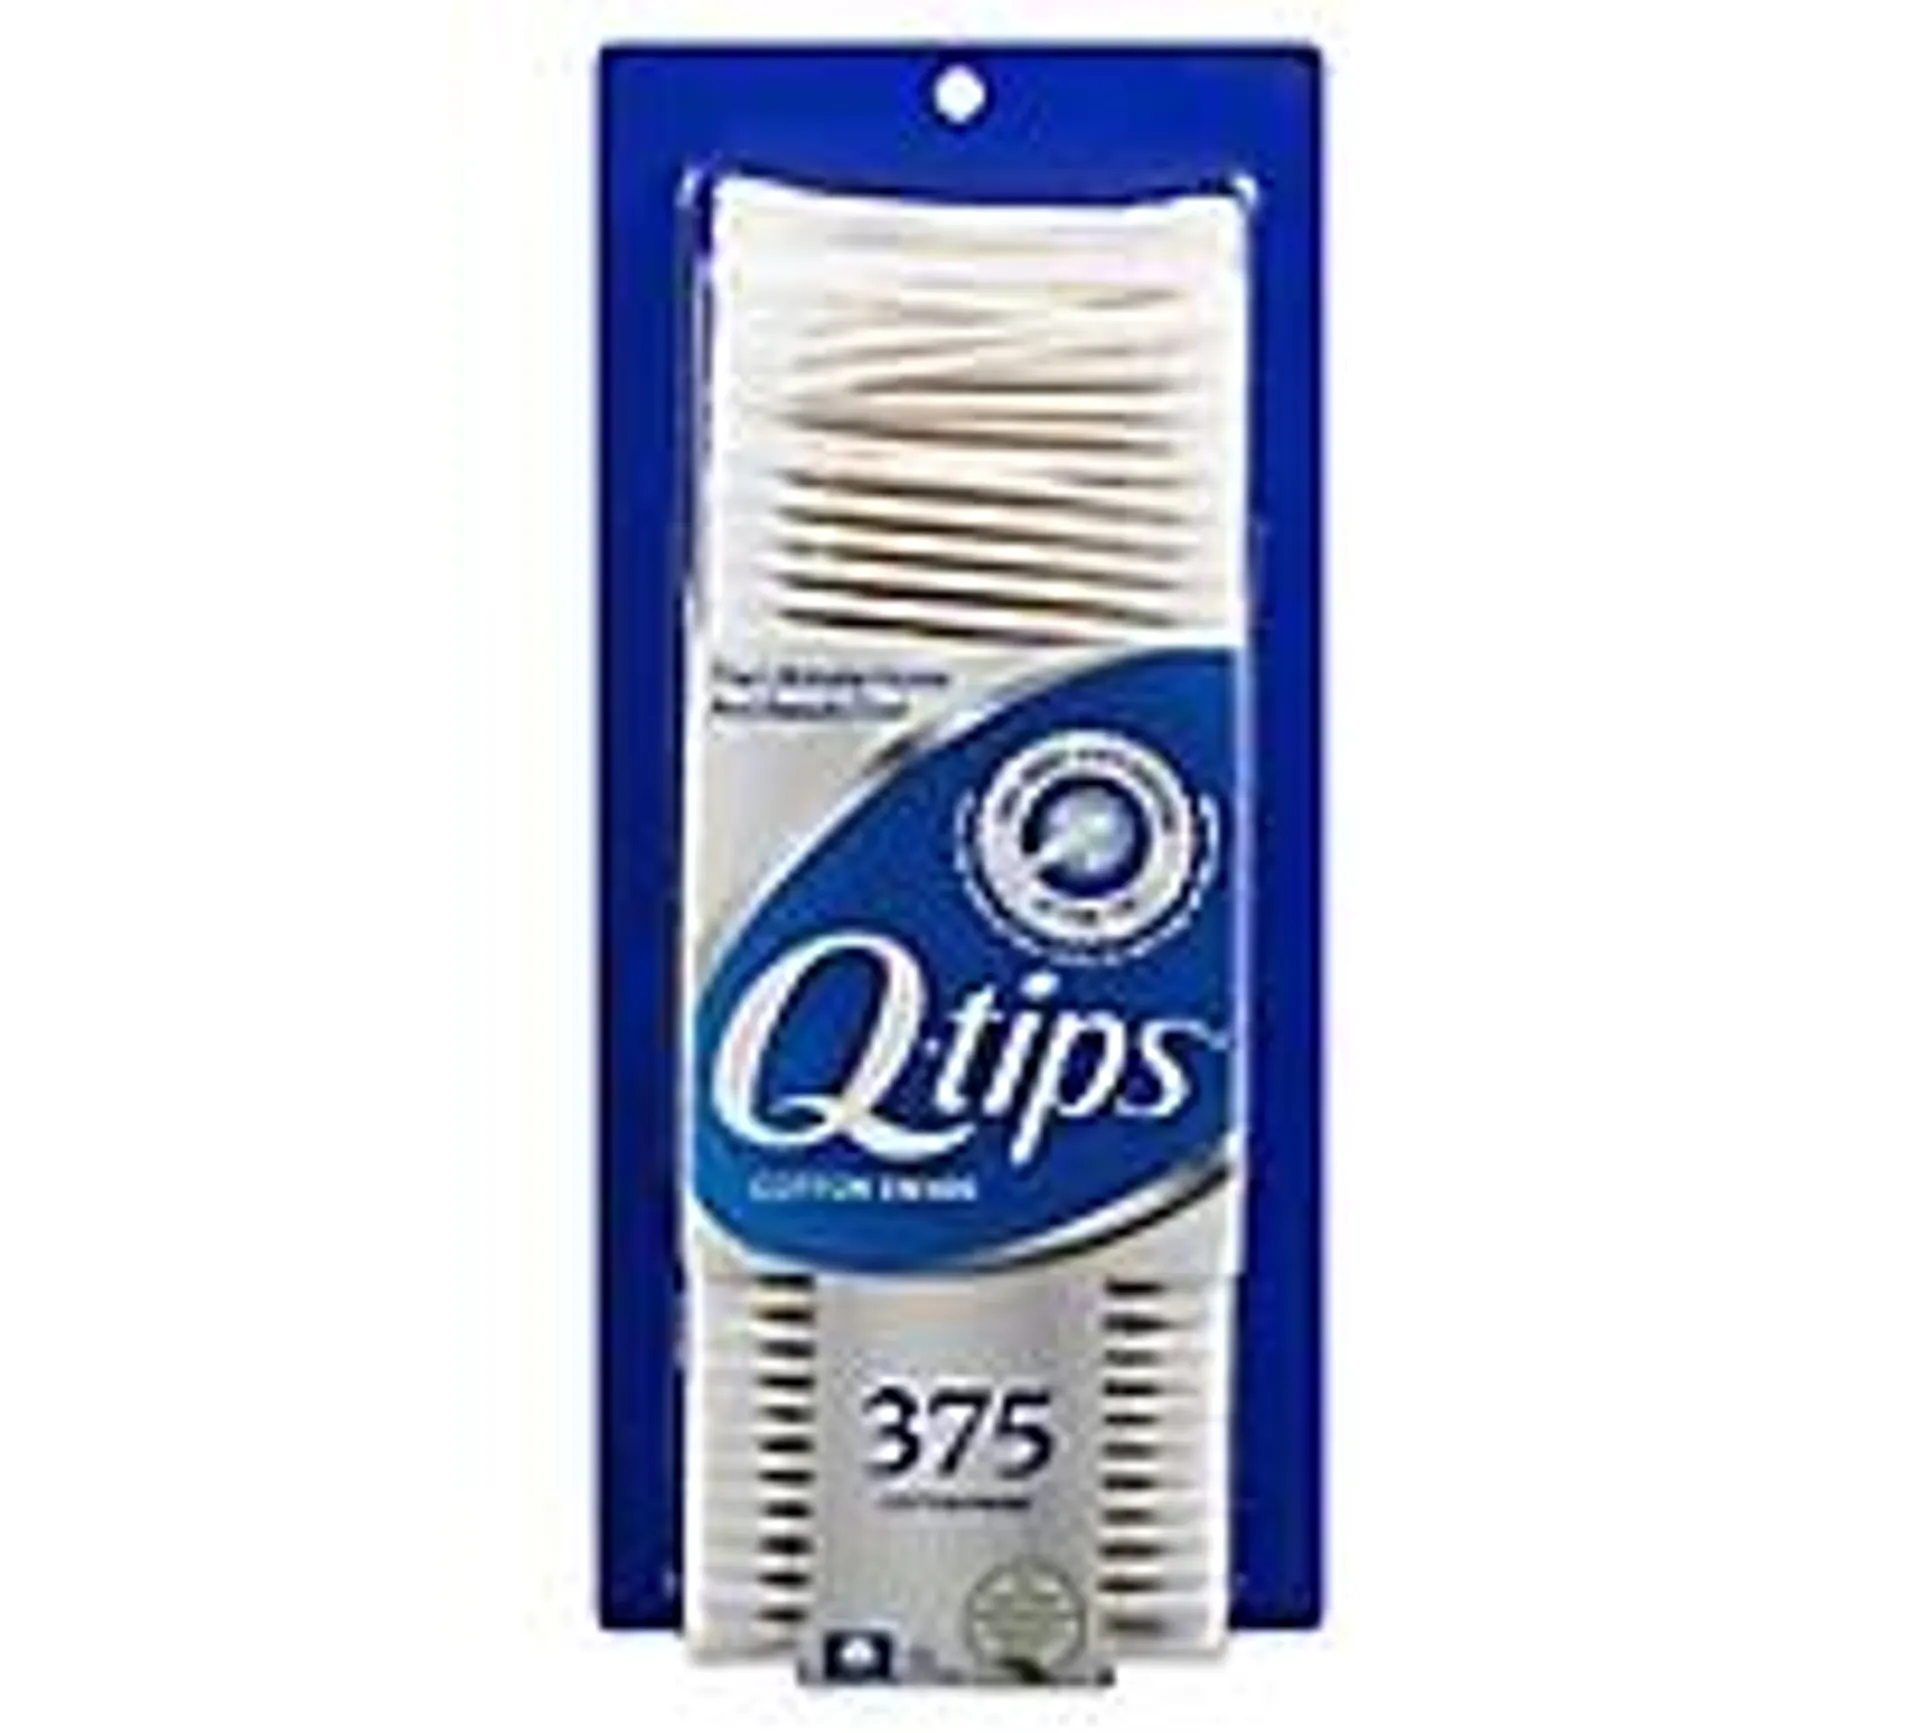 Q-tips Cotton Swabs - 375 Count